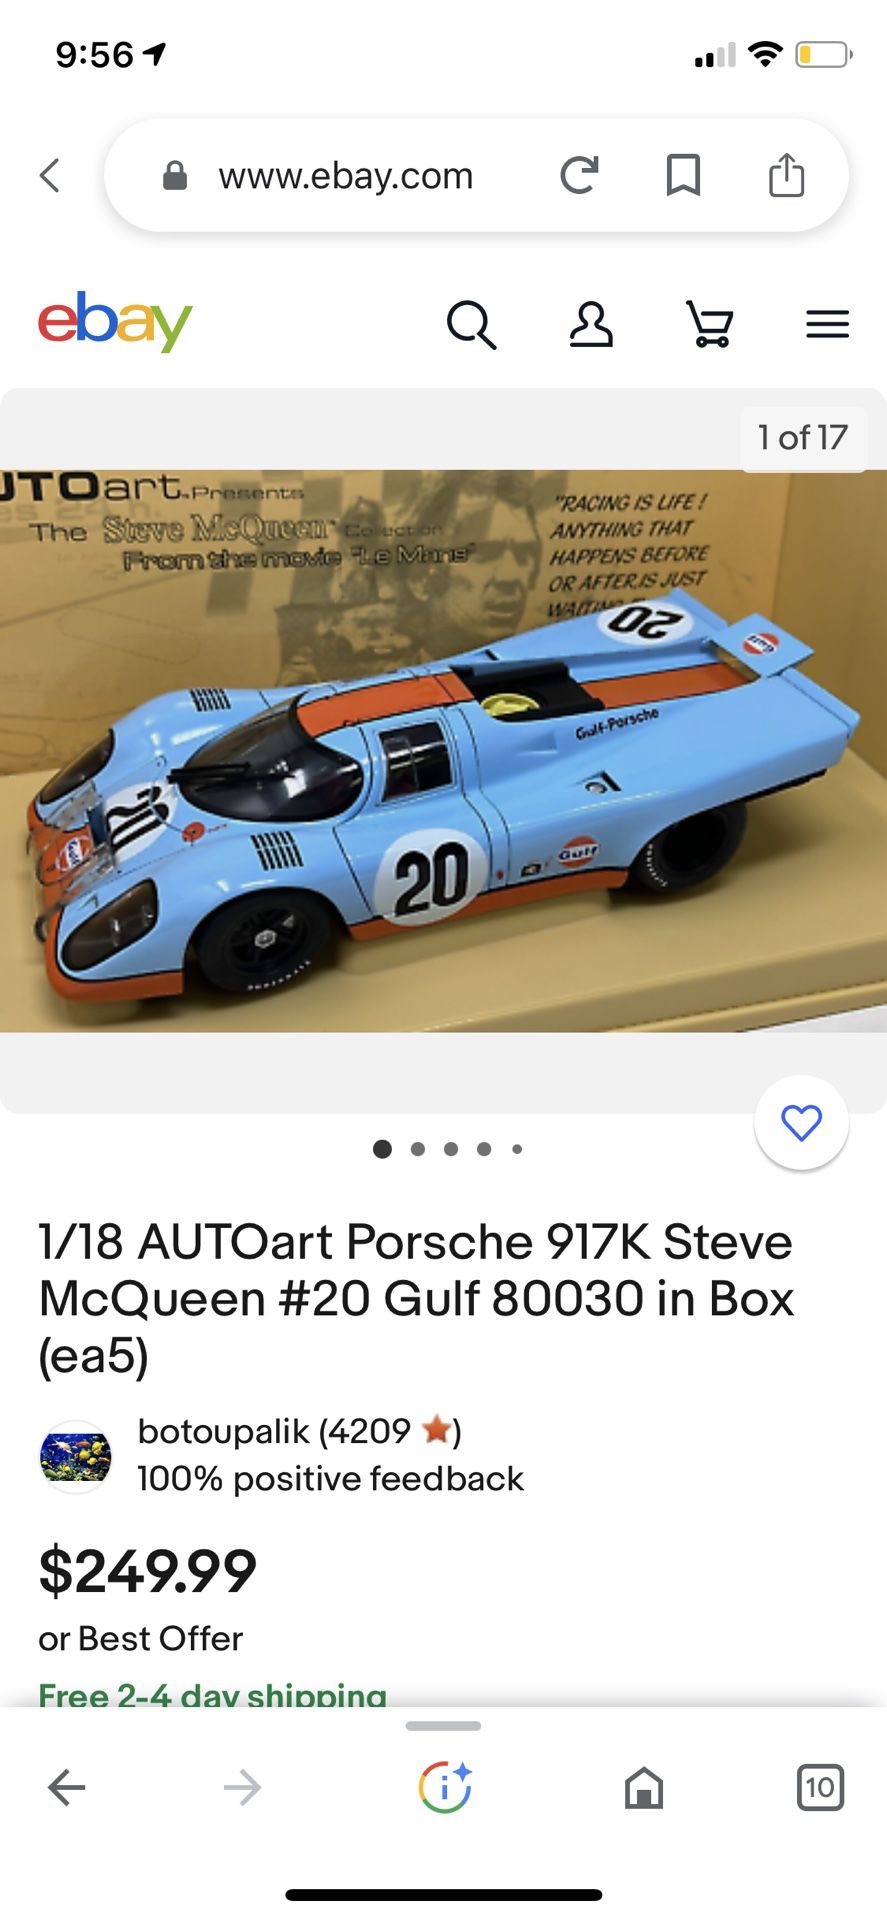 1/18 AUTOart Porsche 917K Steve McQueen #20 in Box